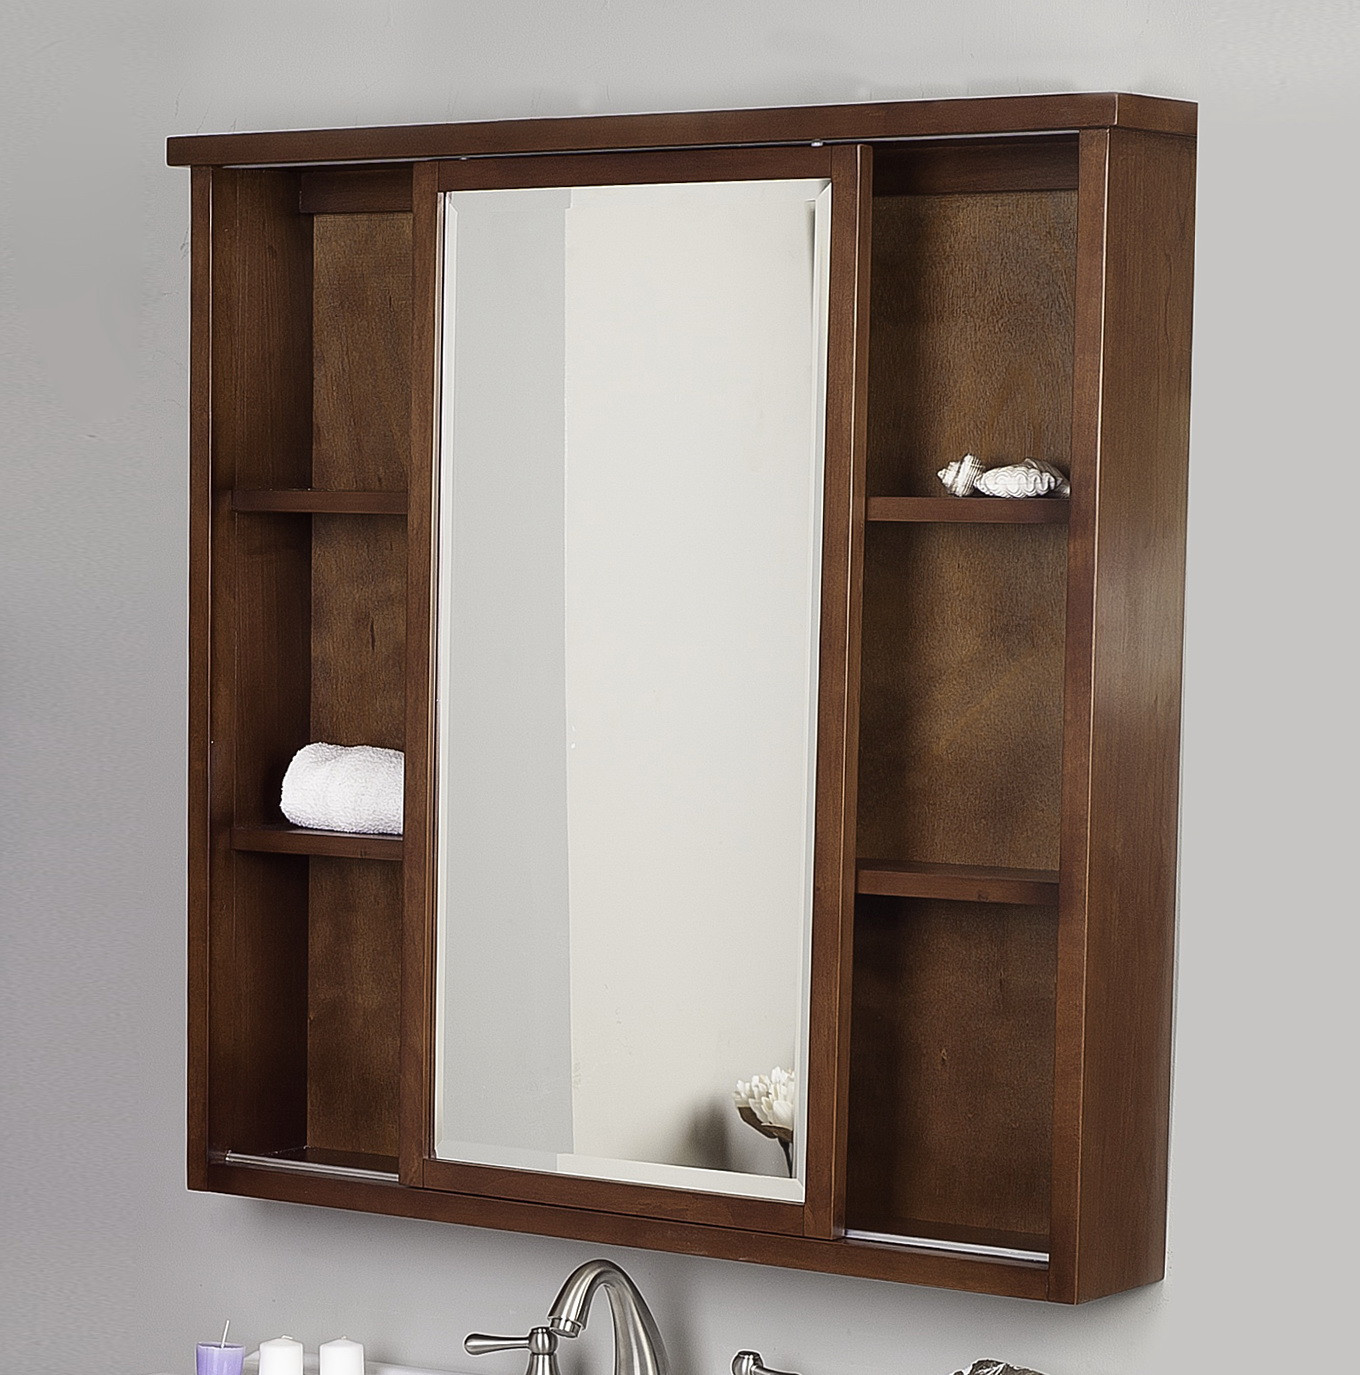 Home Depot Bathroom Mirror Cabinet
 Home Depot Mirror Bathroom Home Design Idea Lighted